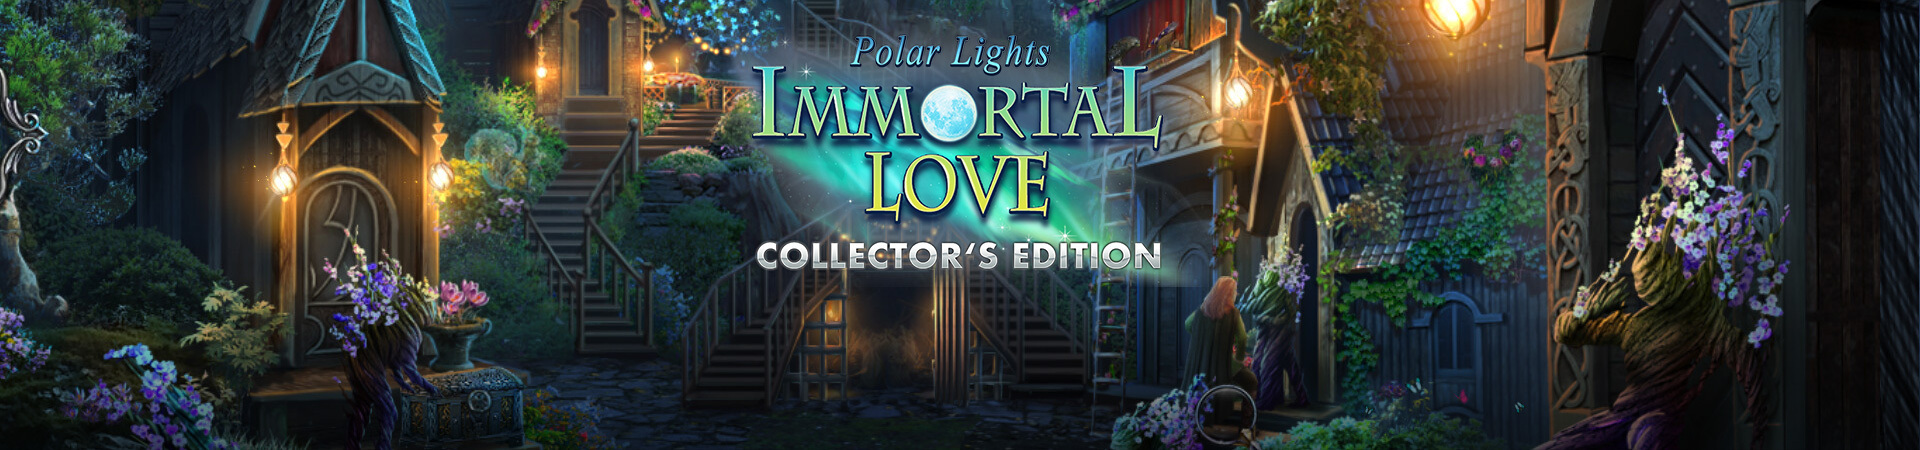 Immortal Love: Polar Lights CE - <span> Now available</span>